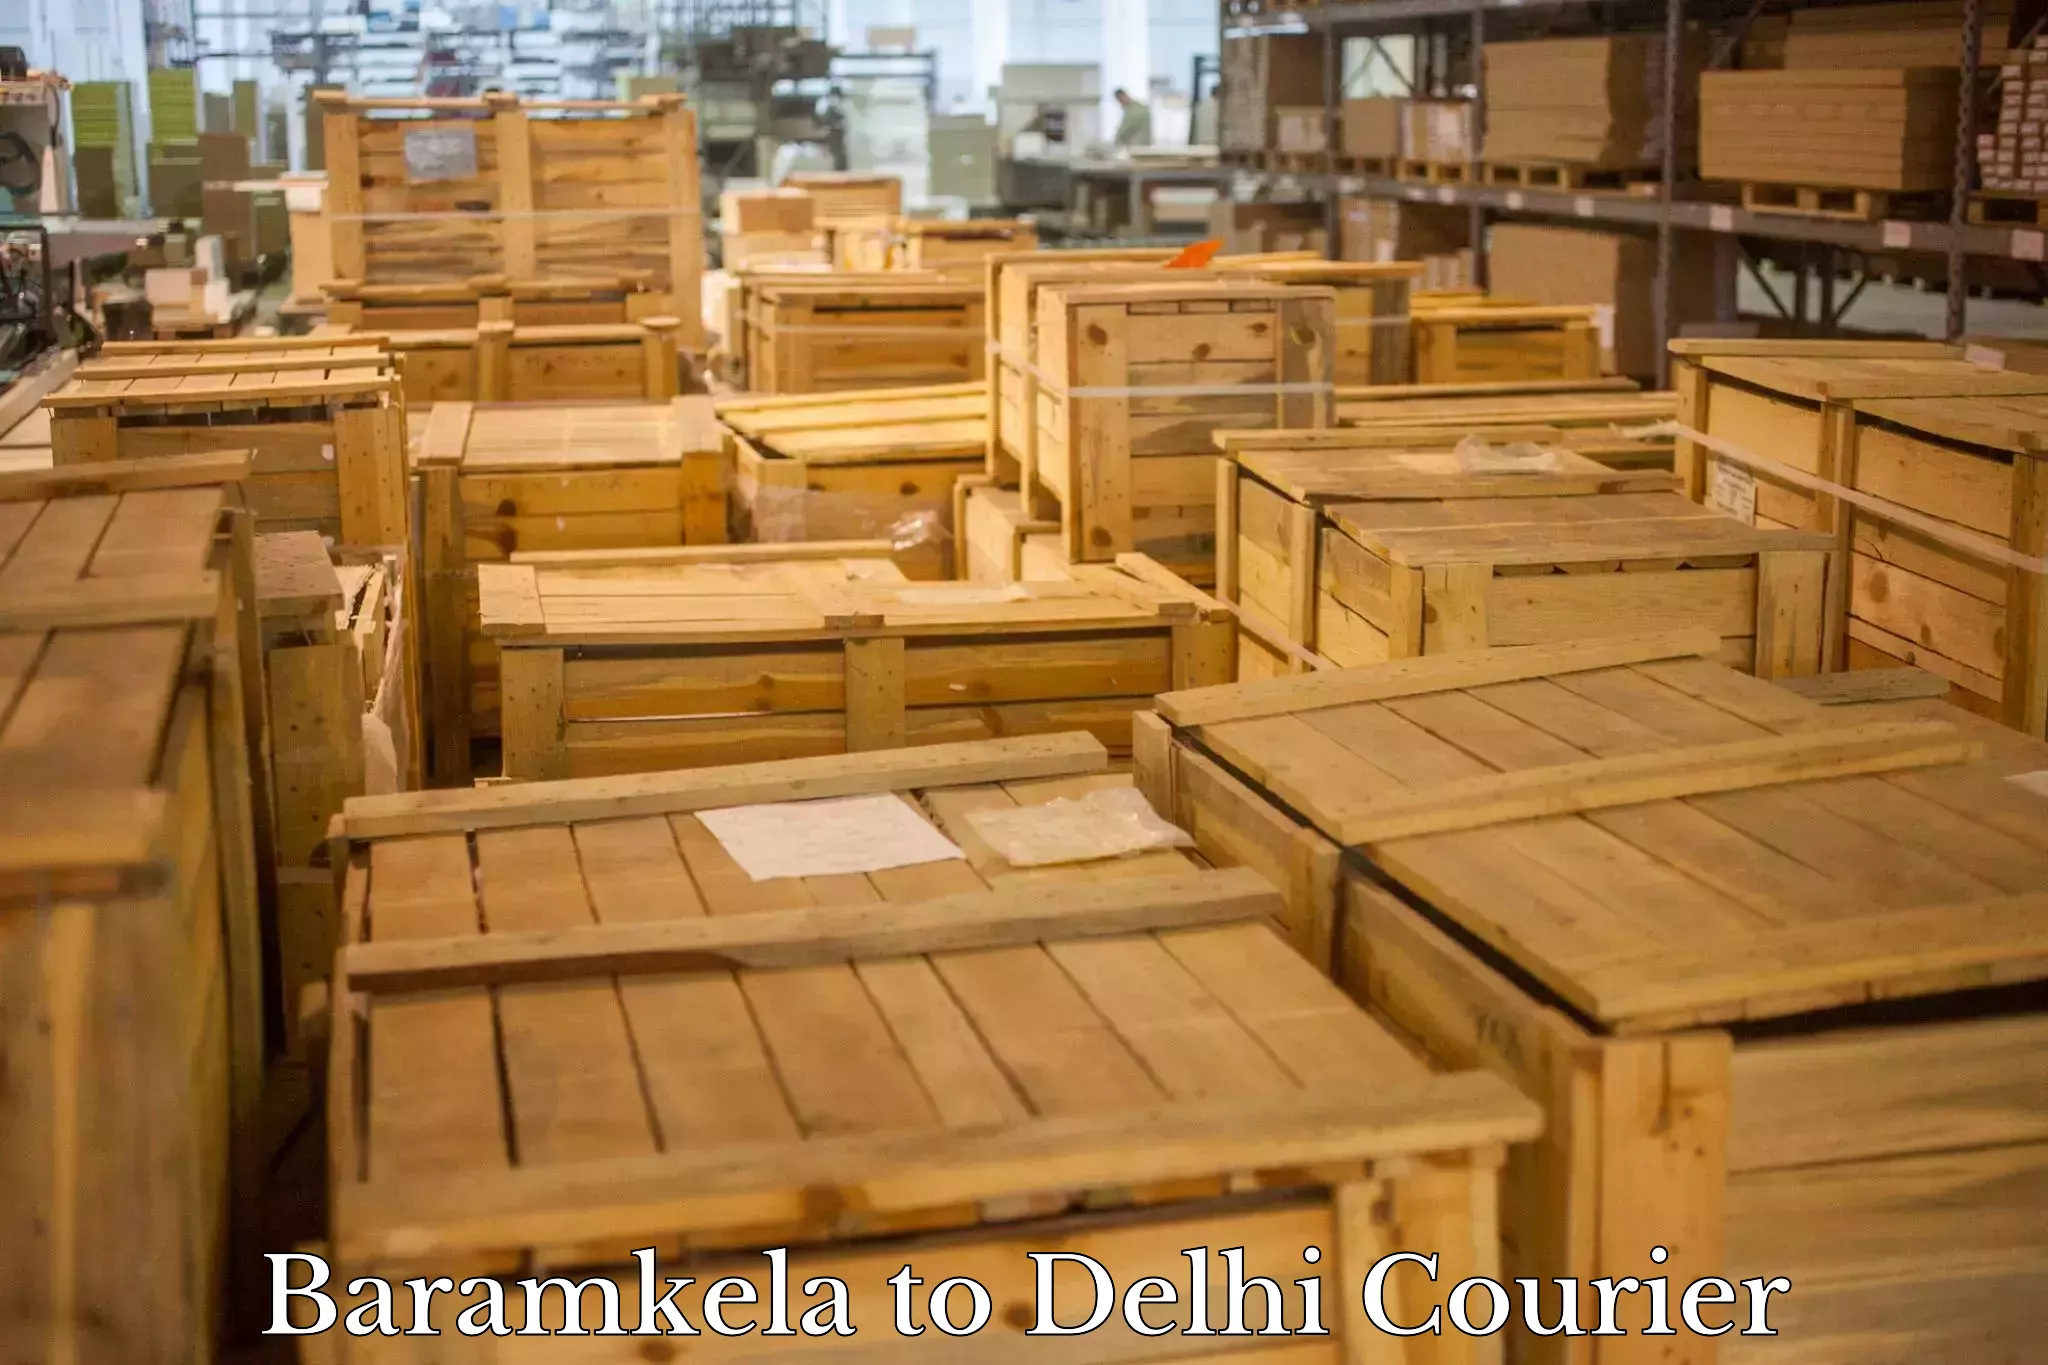 Global shipping networks Baramkela to Delhi